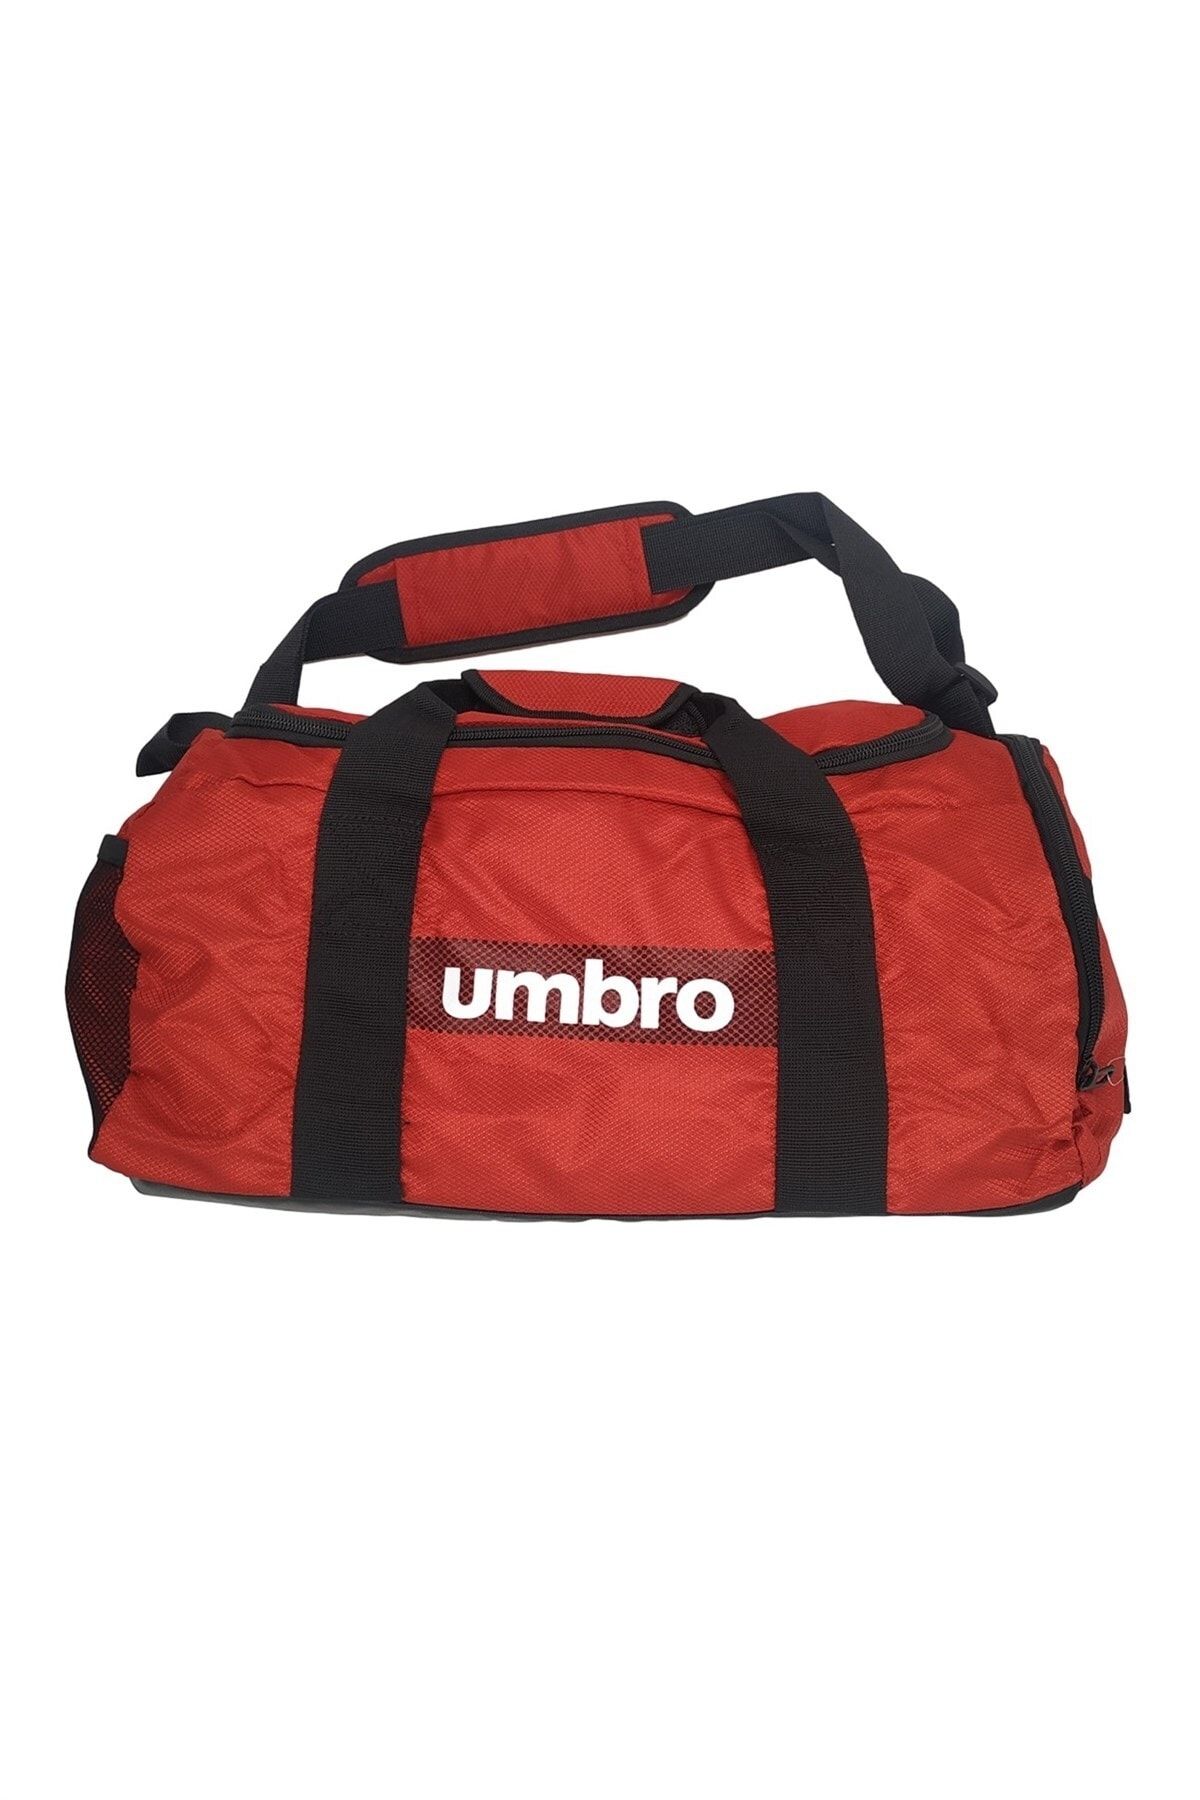 Umbro Woo Sport Bag - Unisex Kırmızı Spor Çanta - Tt-0036